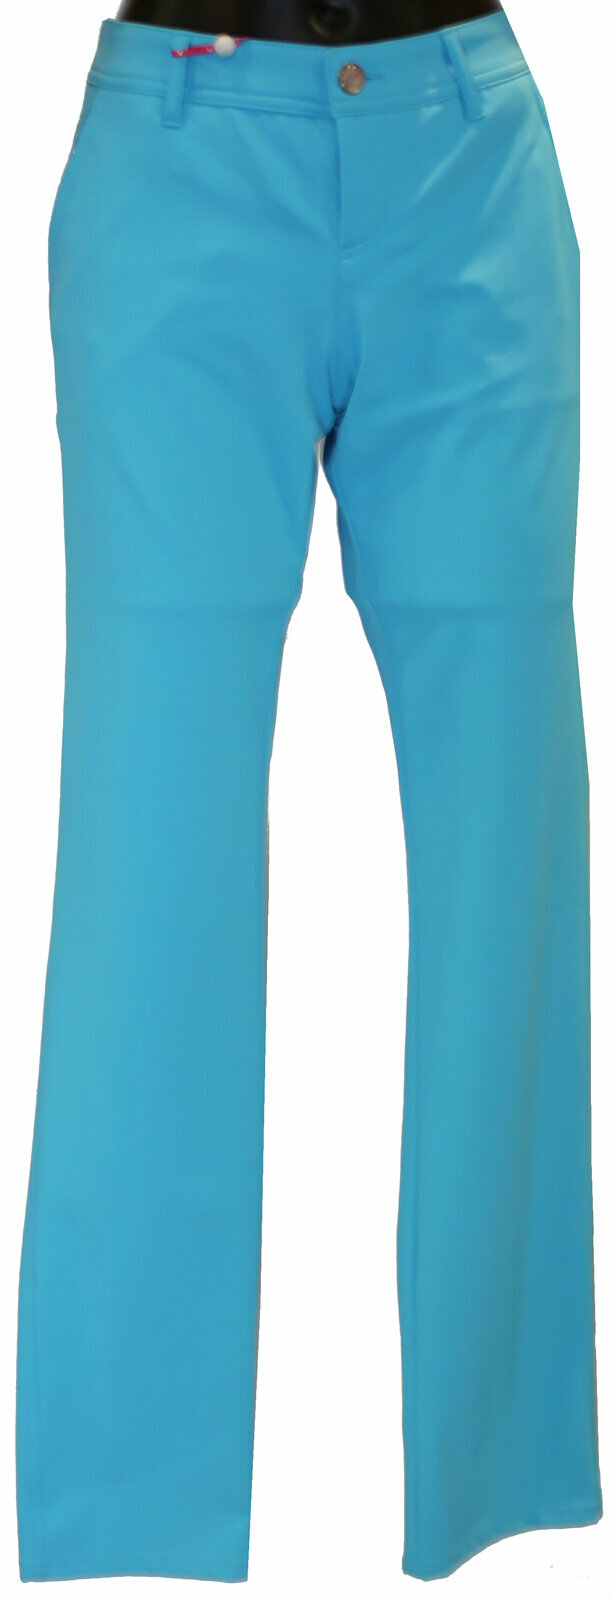 Pantalons Alberto Alva 3xDRY Cooler Ice Blue 34/R